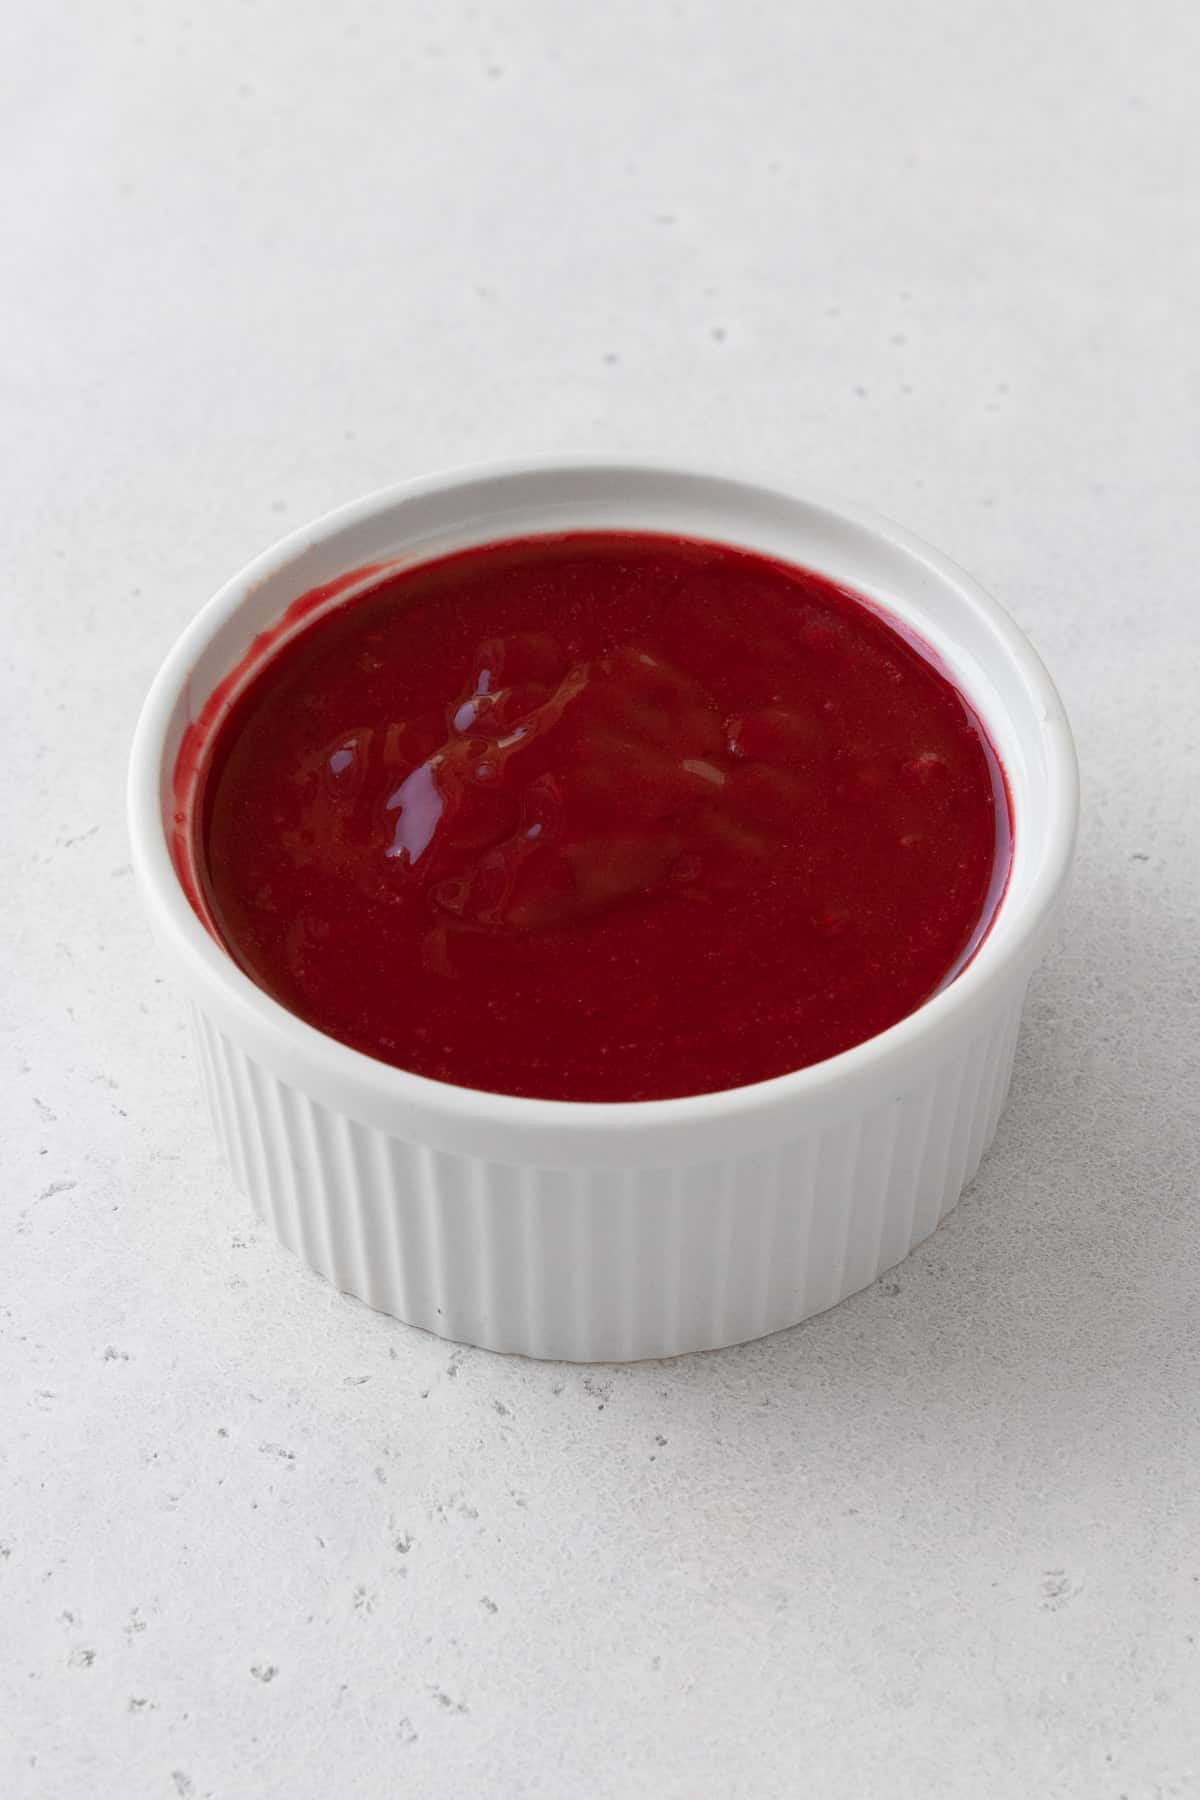 amaretto raspberry coulis in a white bowl.